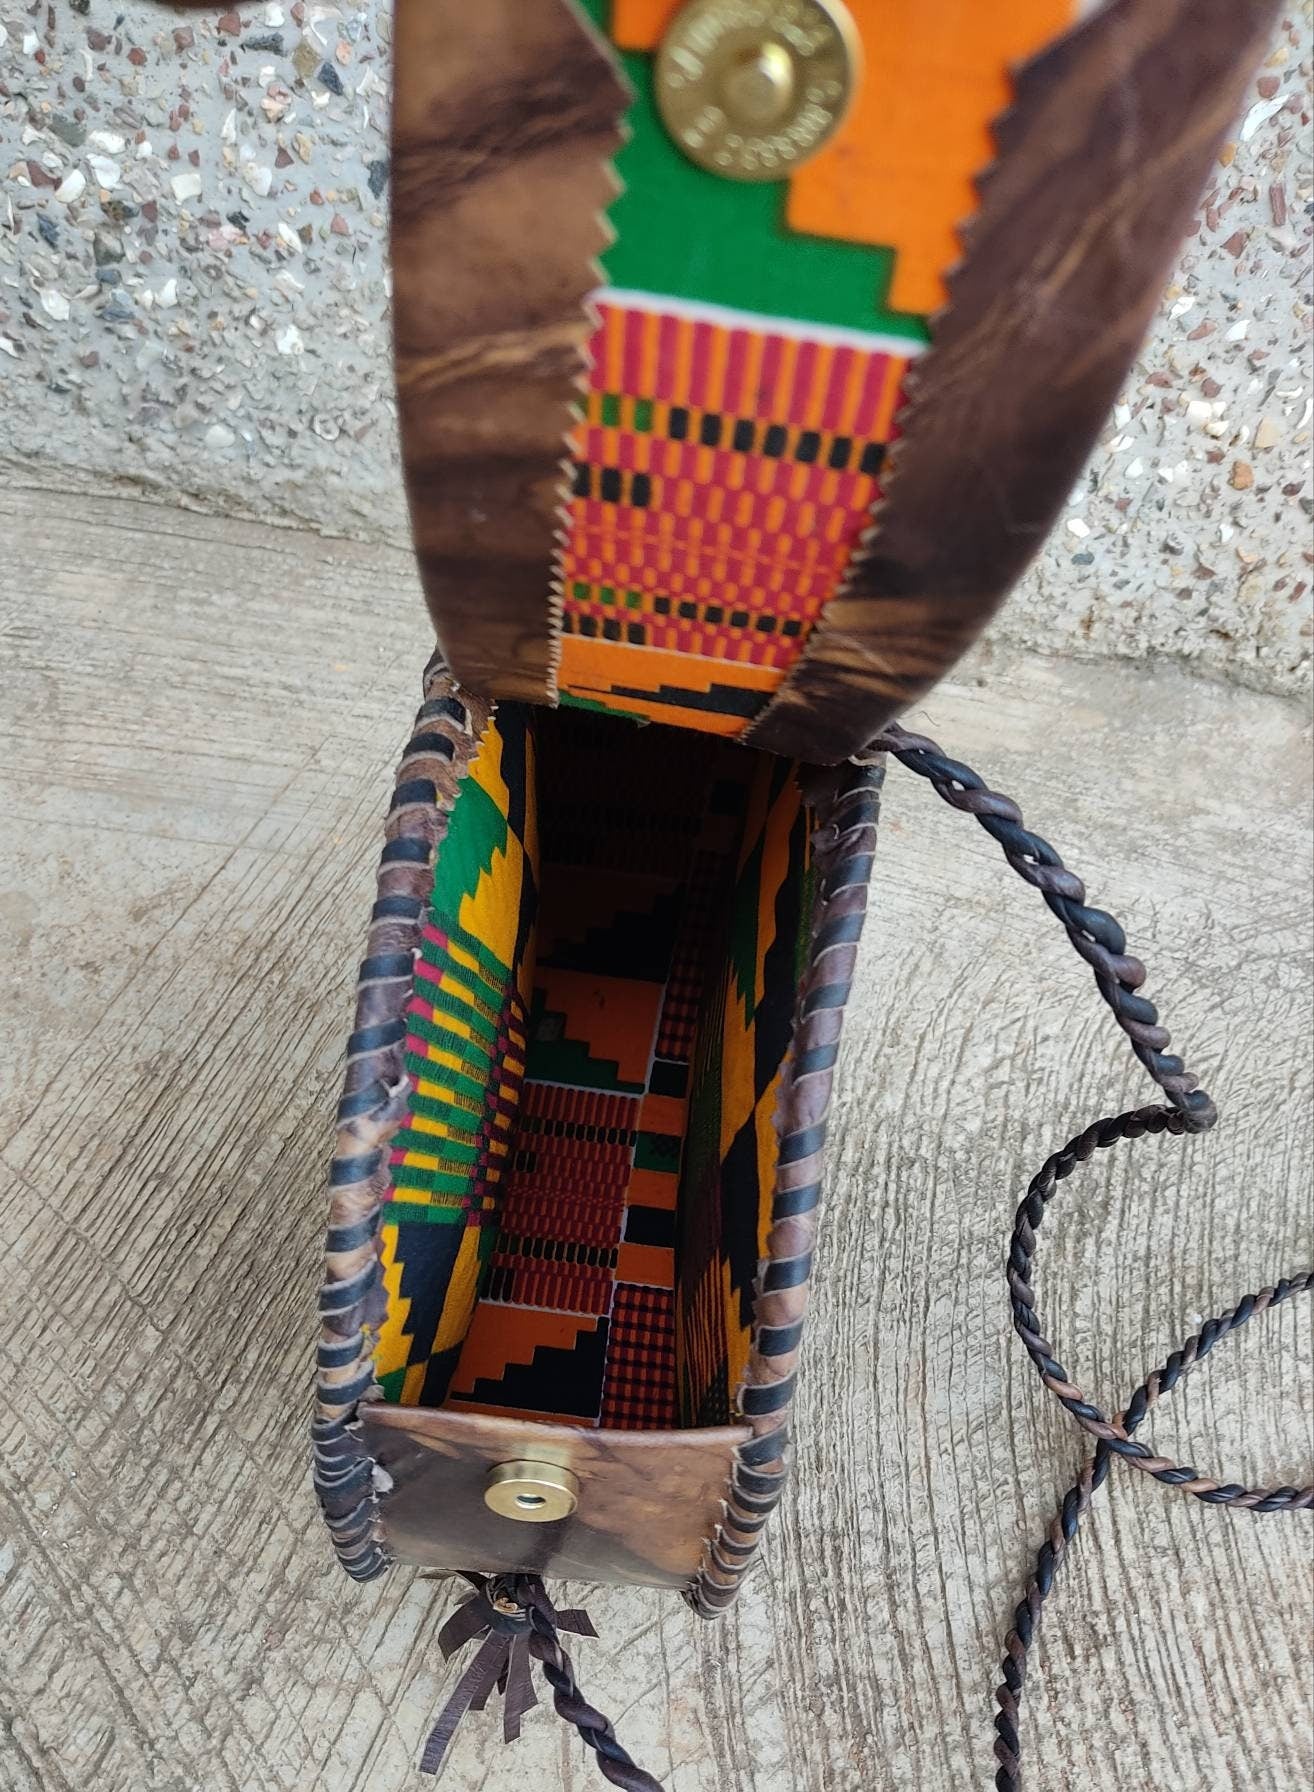 Straw handbag | Straw bag | Basket bag | African baskets | Straw tote bag |Straw purse |Handmade round straw bag |Straw beach bag|Straw tote - AfricanheritageGH